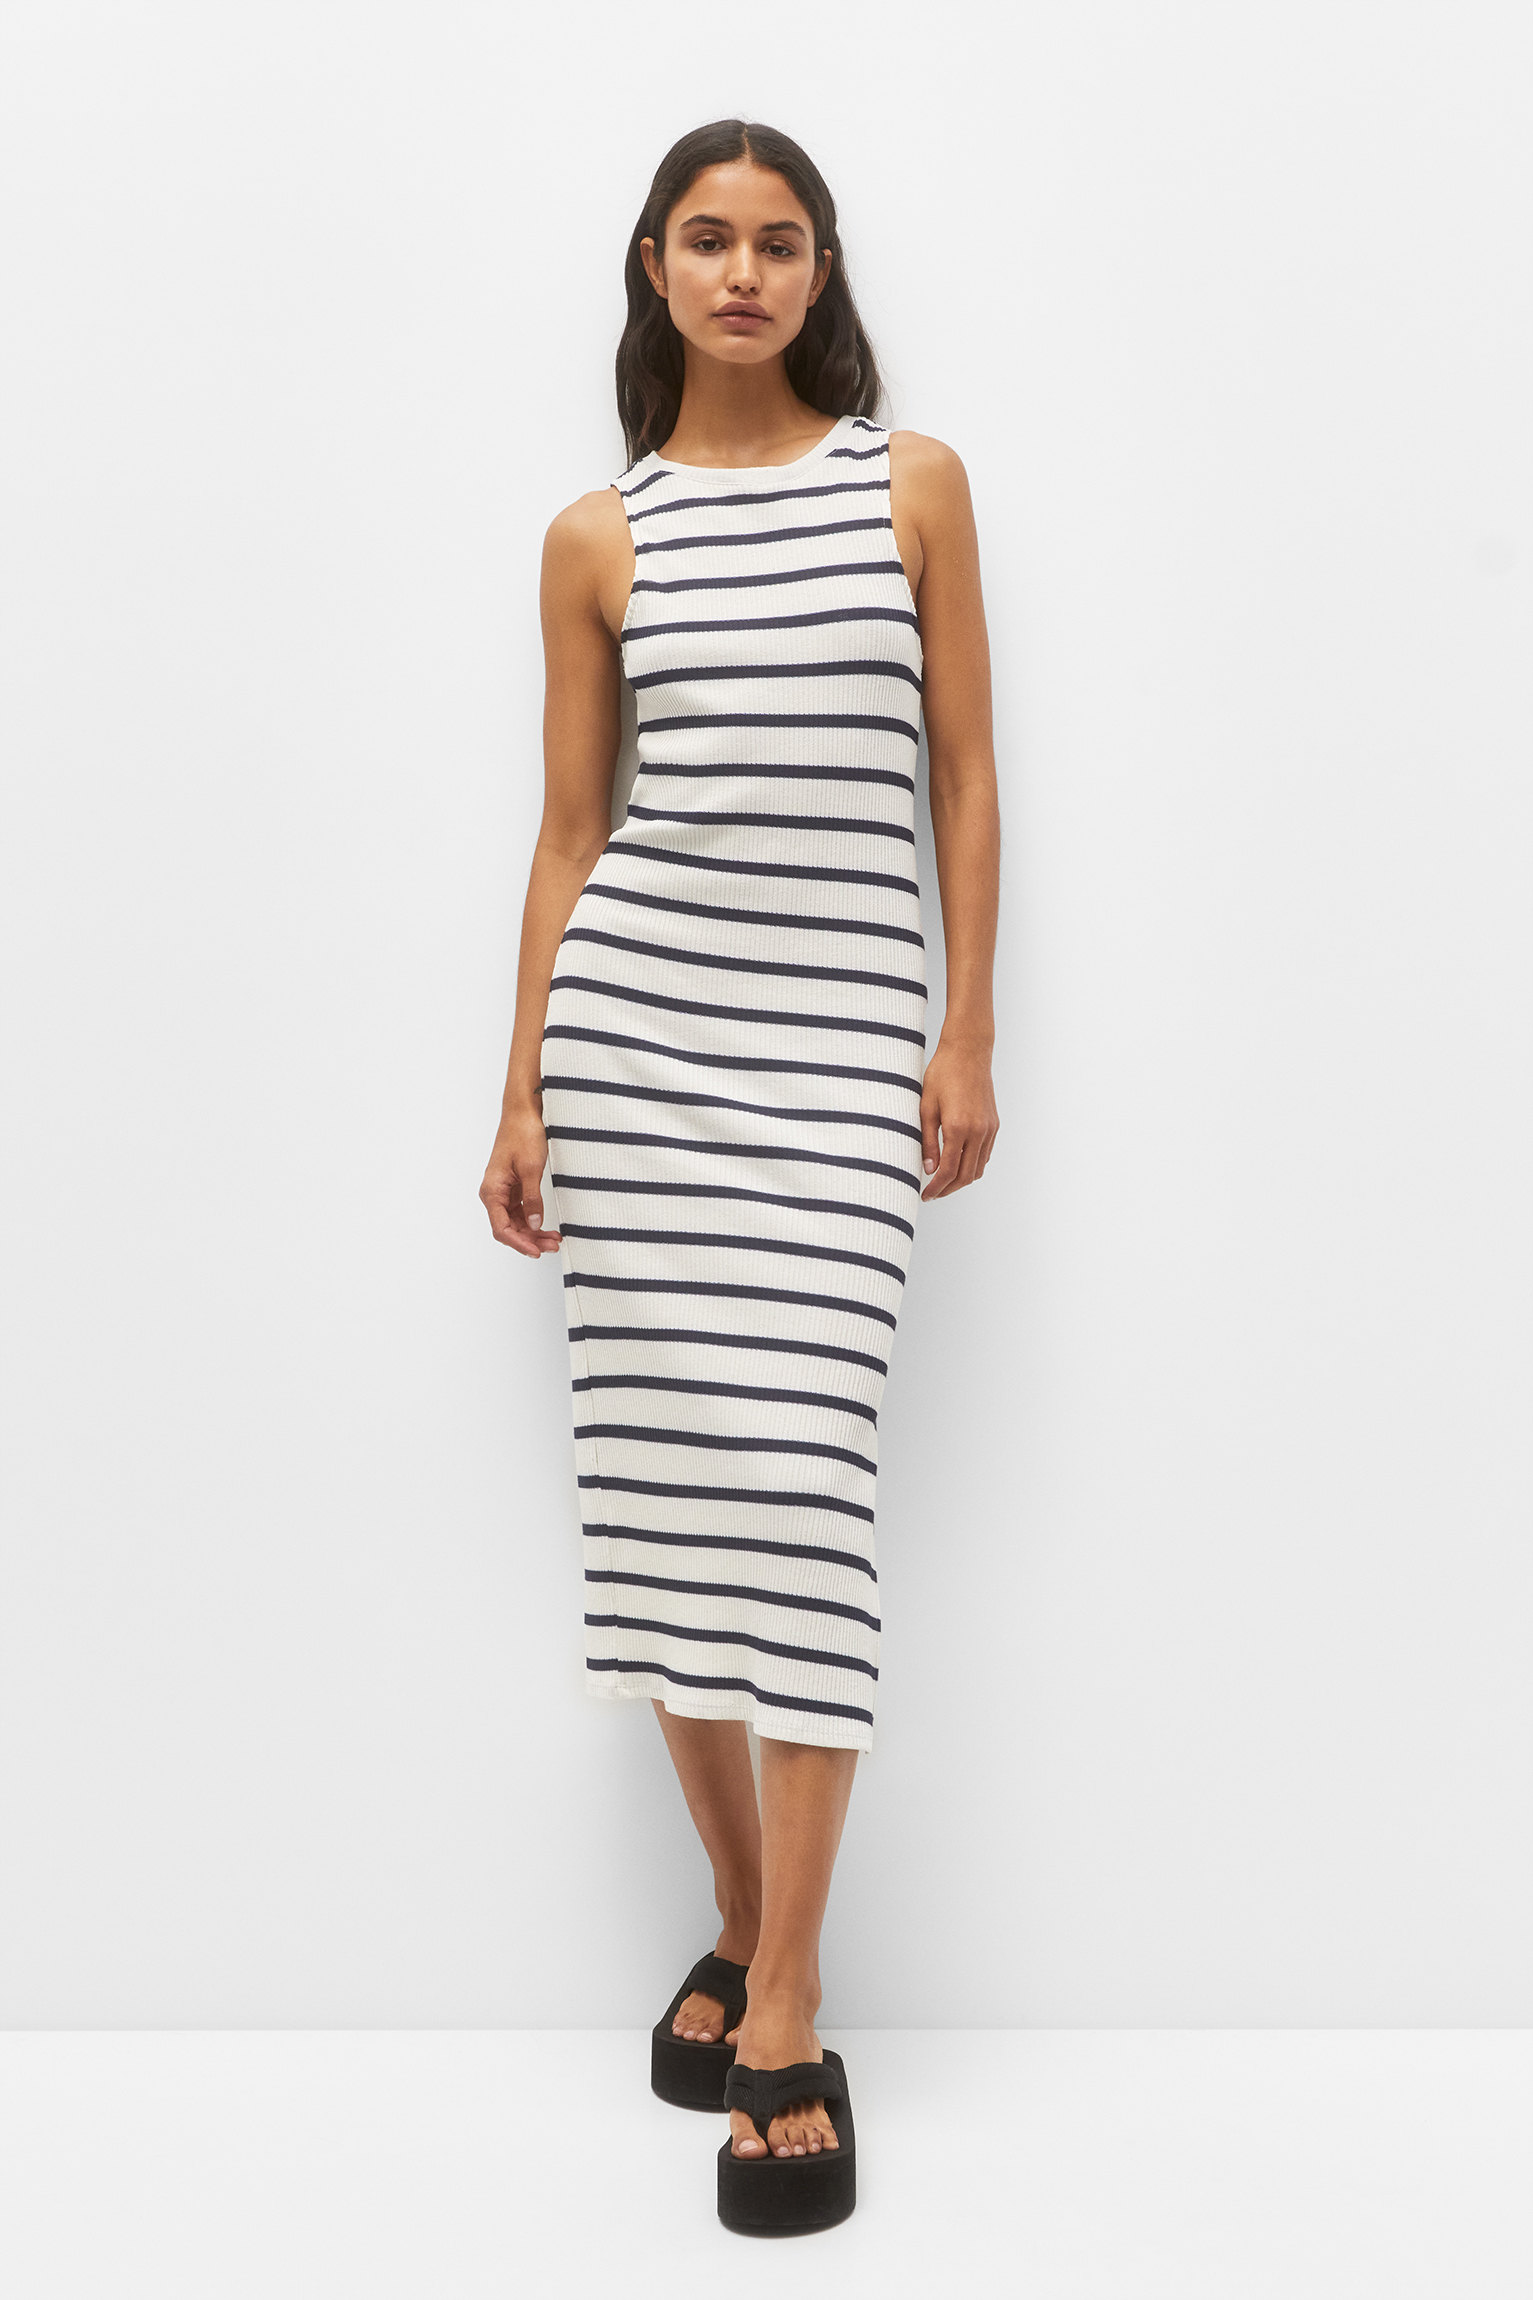 Sleeveless Striped Midi Dress - Lilac/Light Blue - Just $3